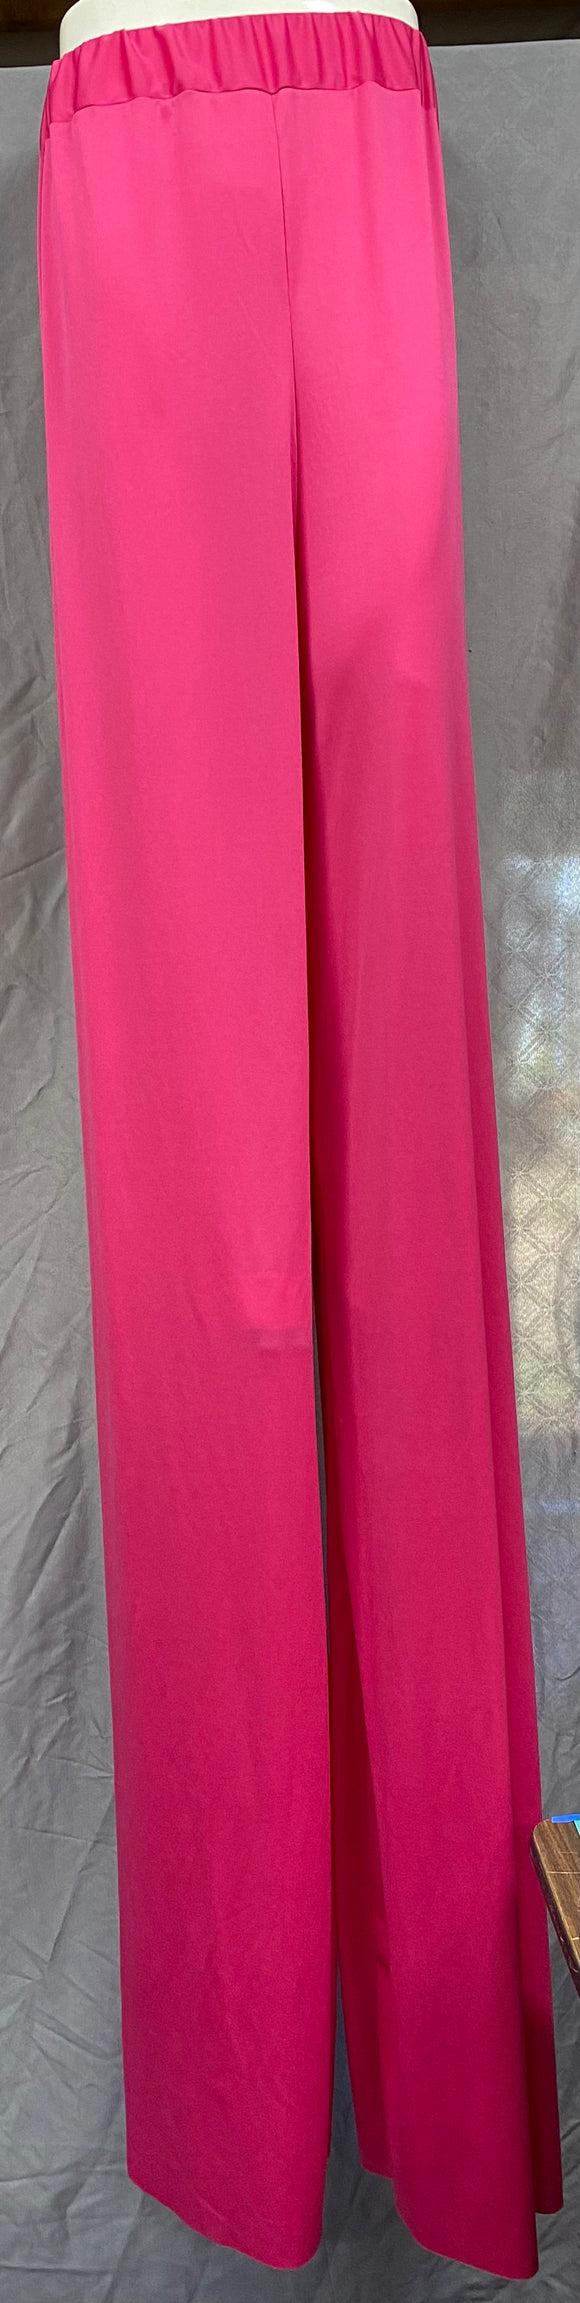 Stilt Pants - Pink Matte 76